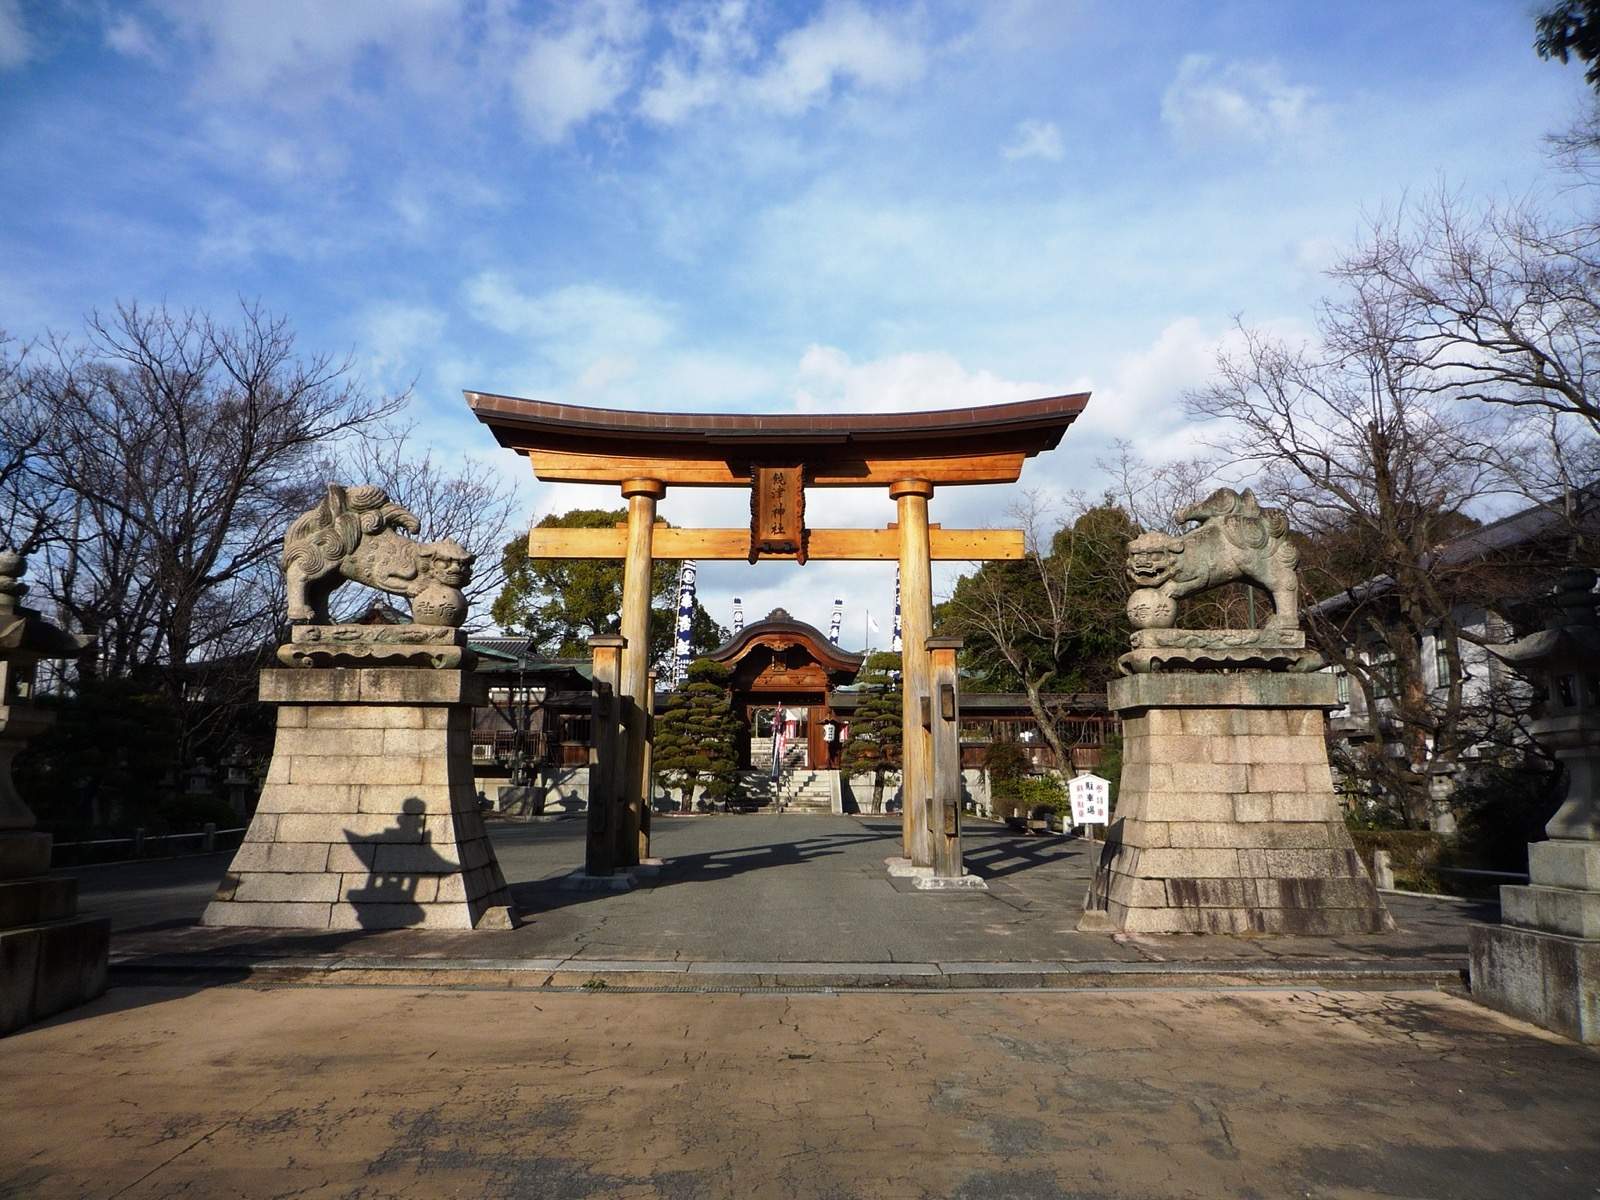 Photo of Nigitsu Shrine, Japan (ja:饒津神社 by Taisyo)